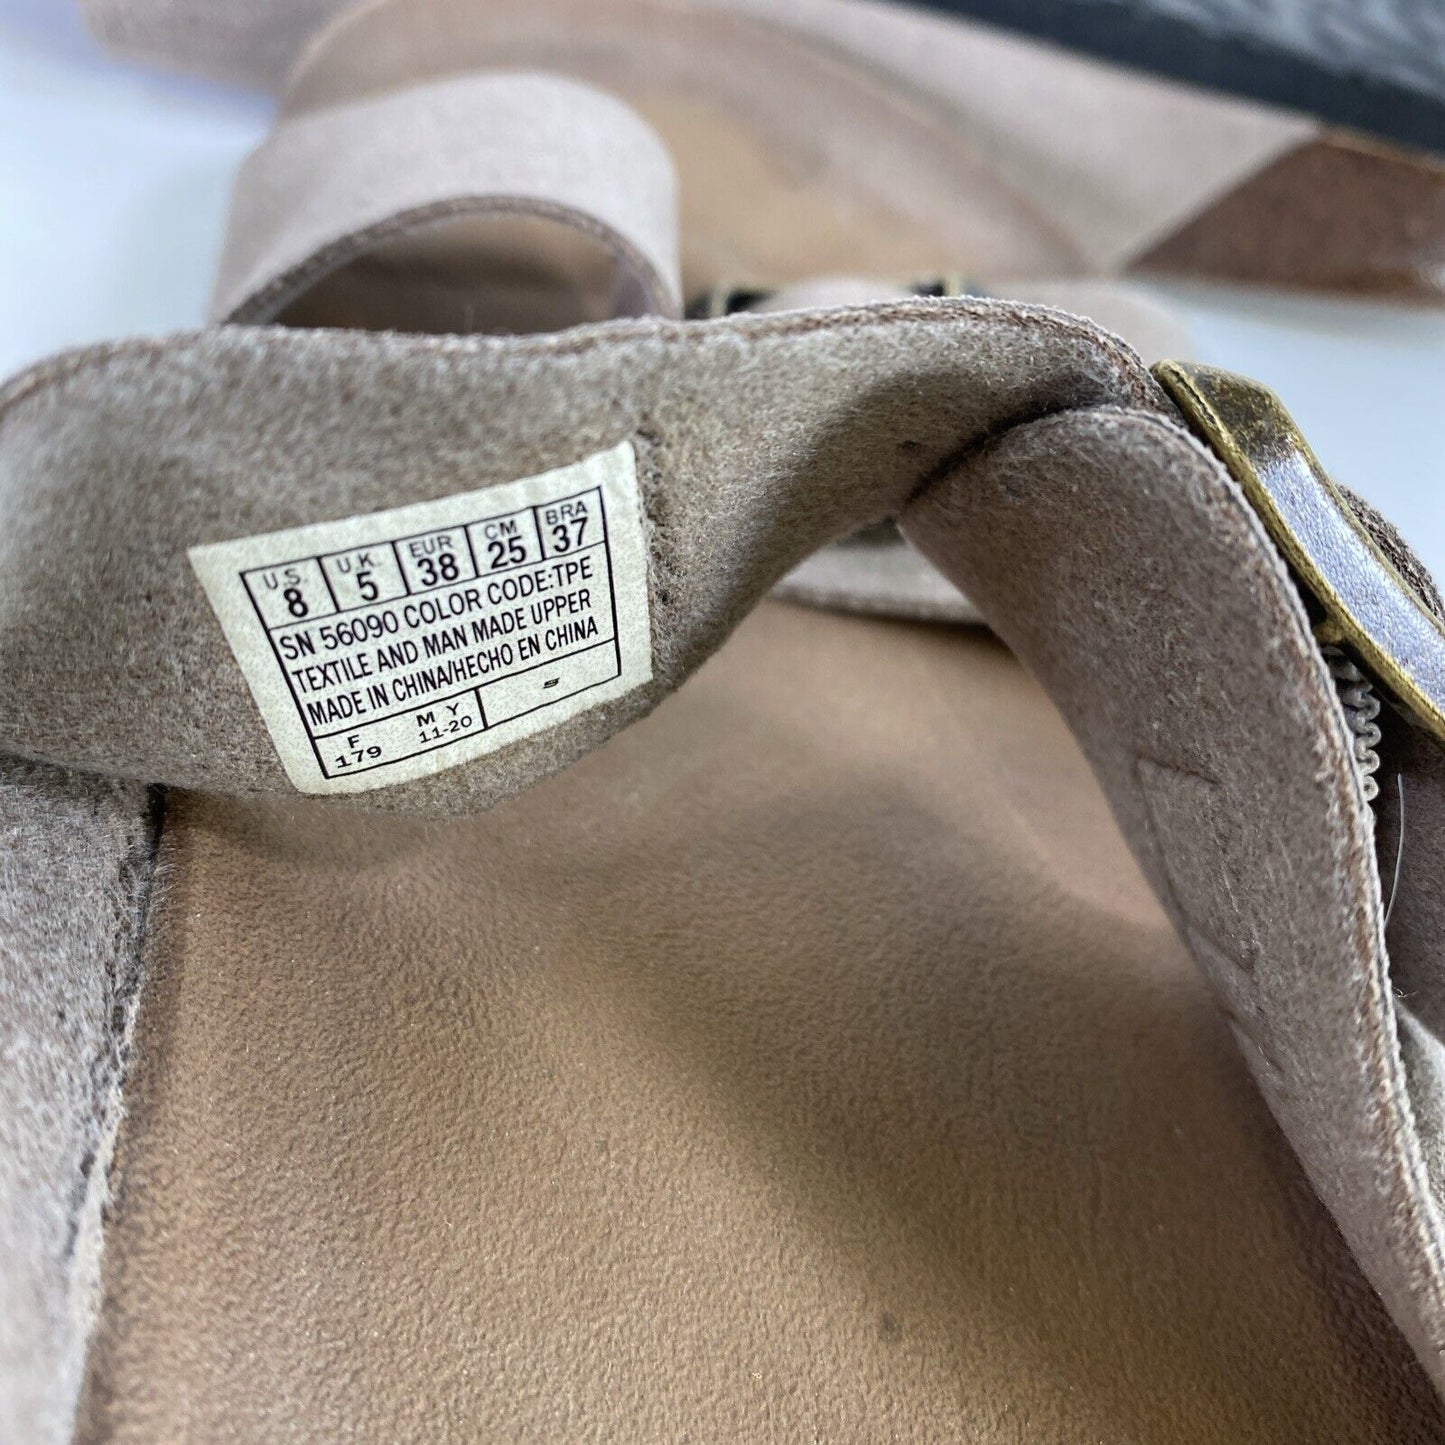 Skechers Women's Gray/Tan Granola Two Strap Sandals - 8